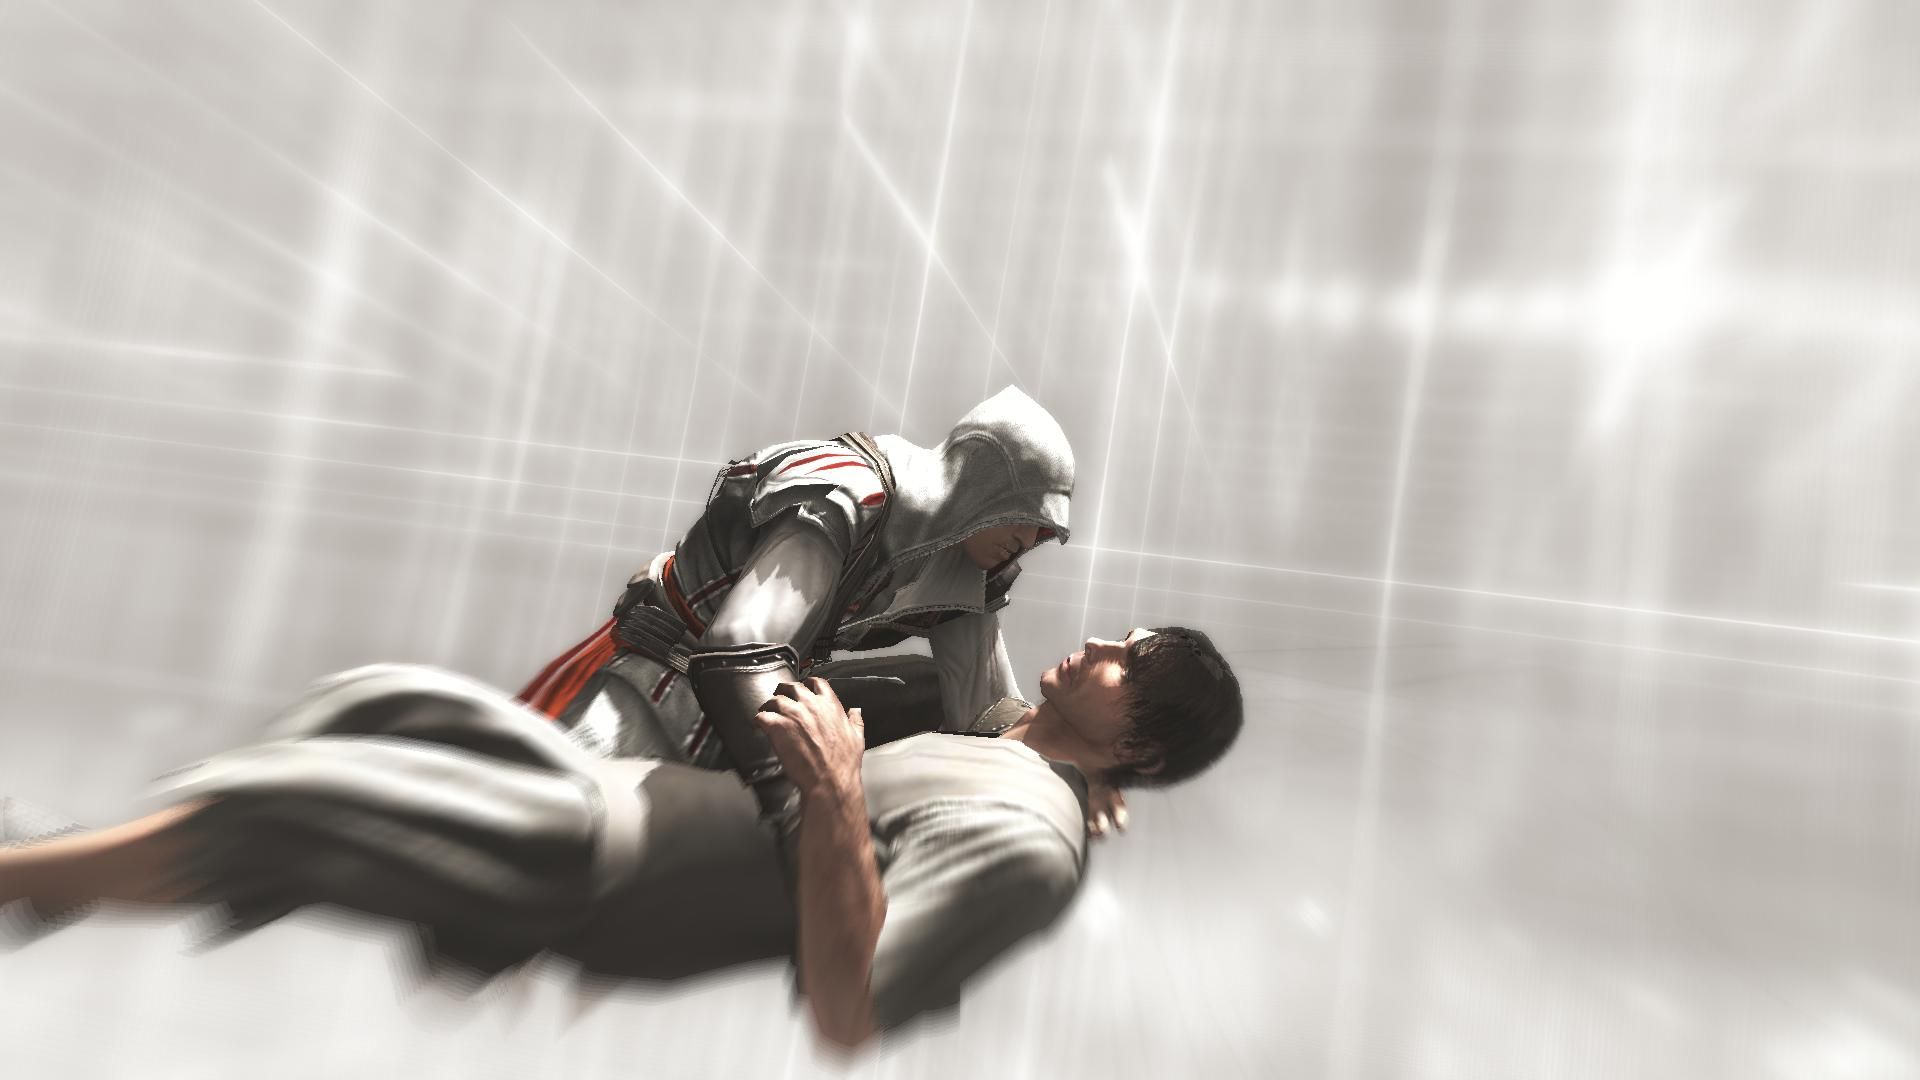 Assassin's Creed Animus death scenes